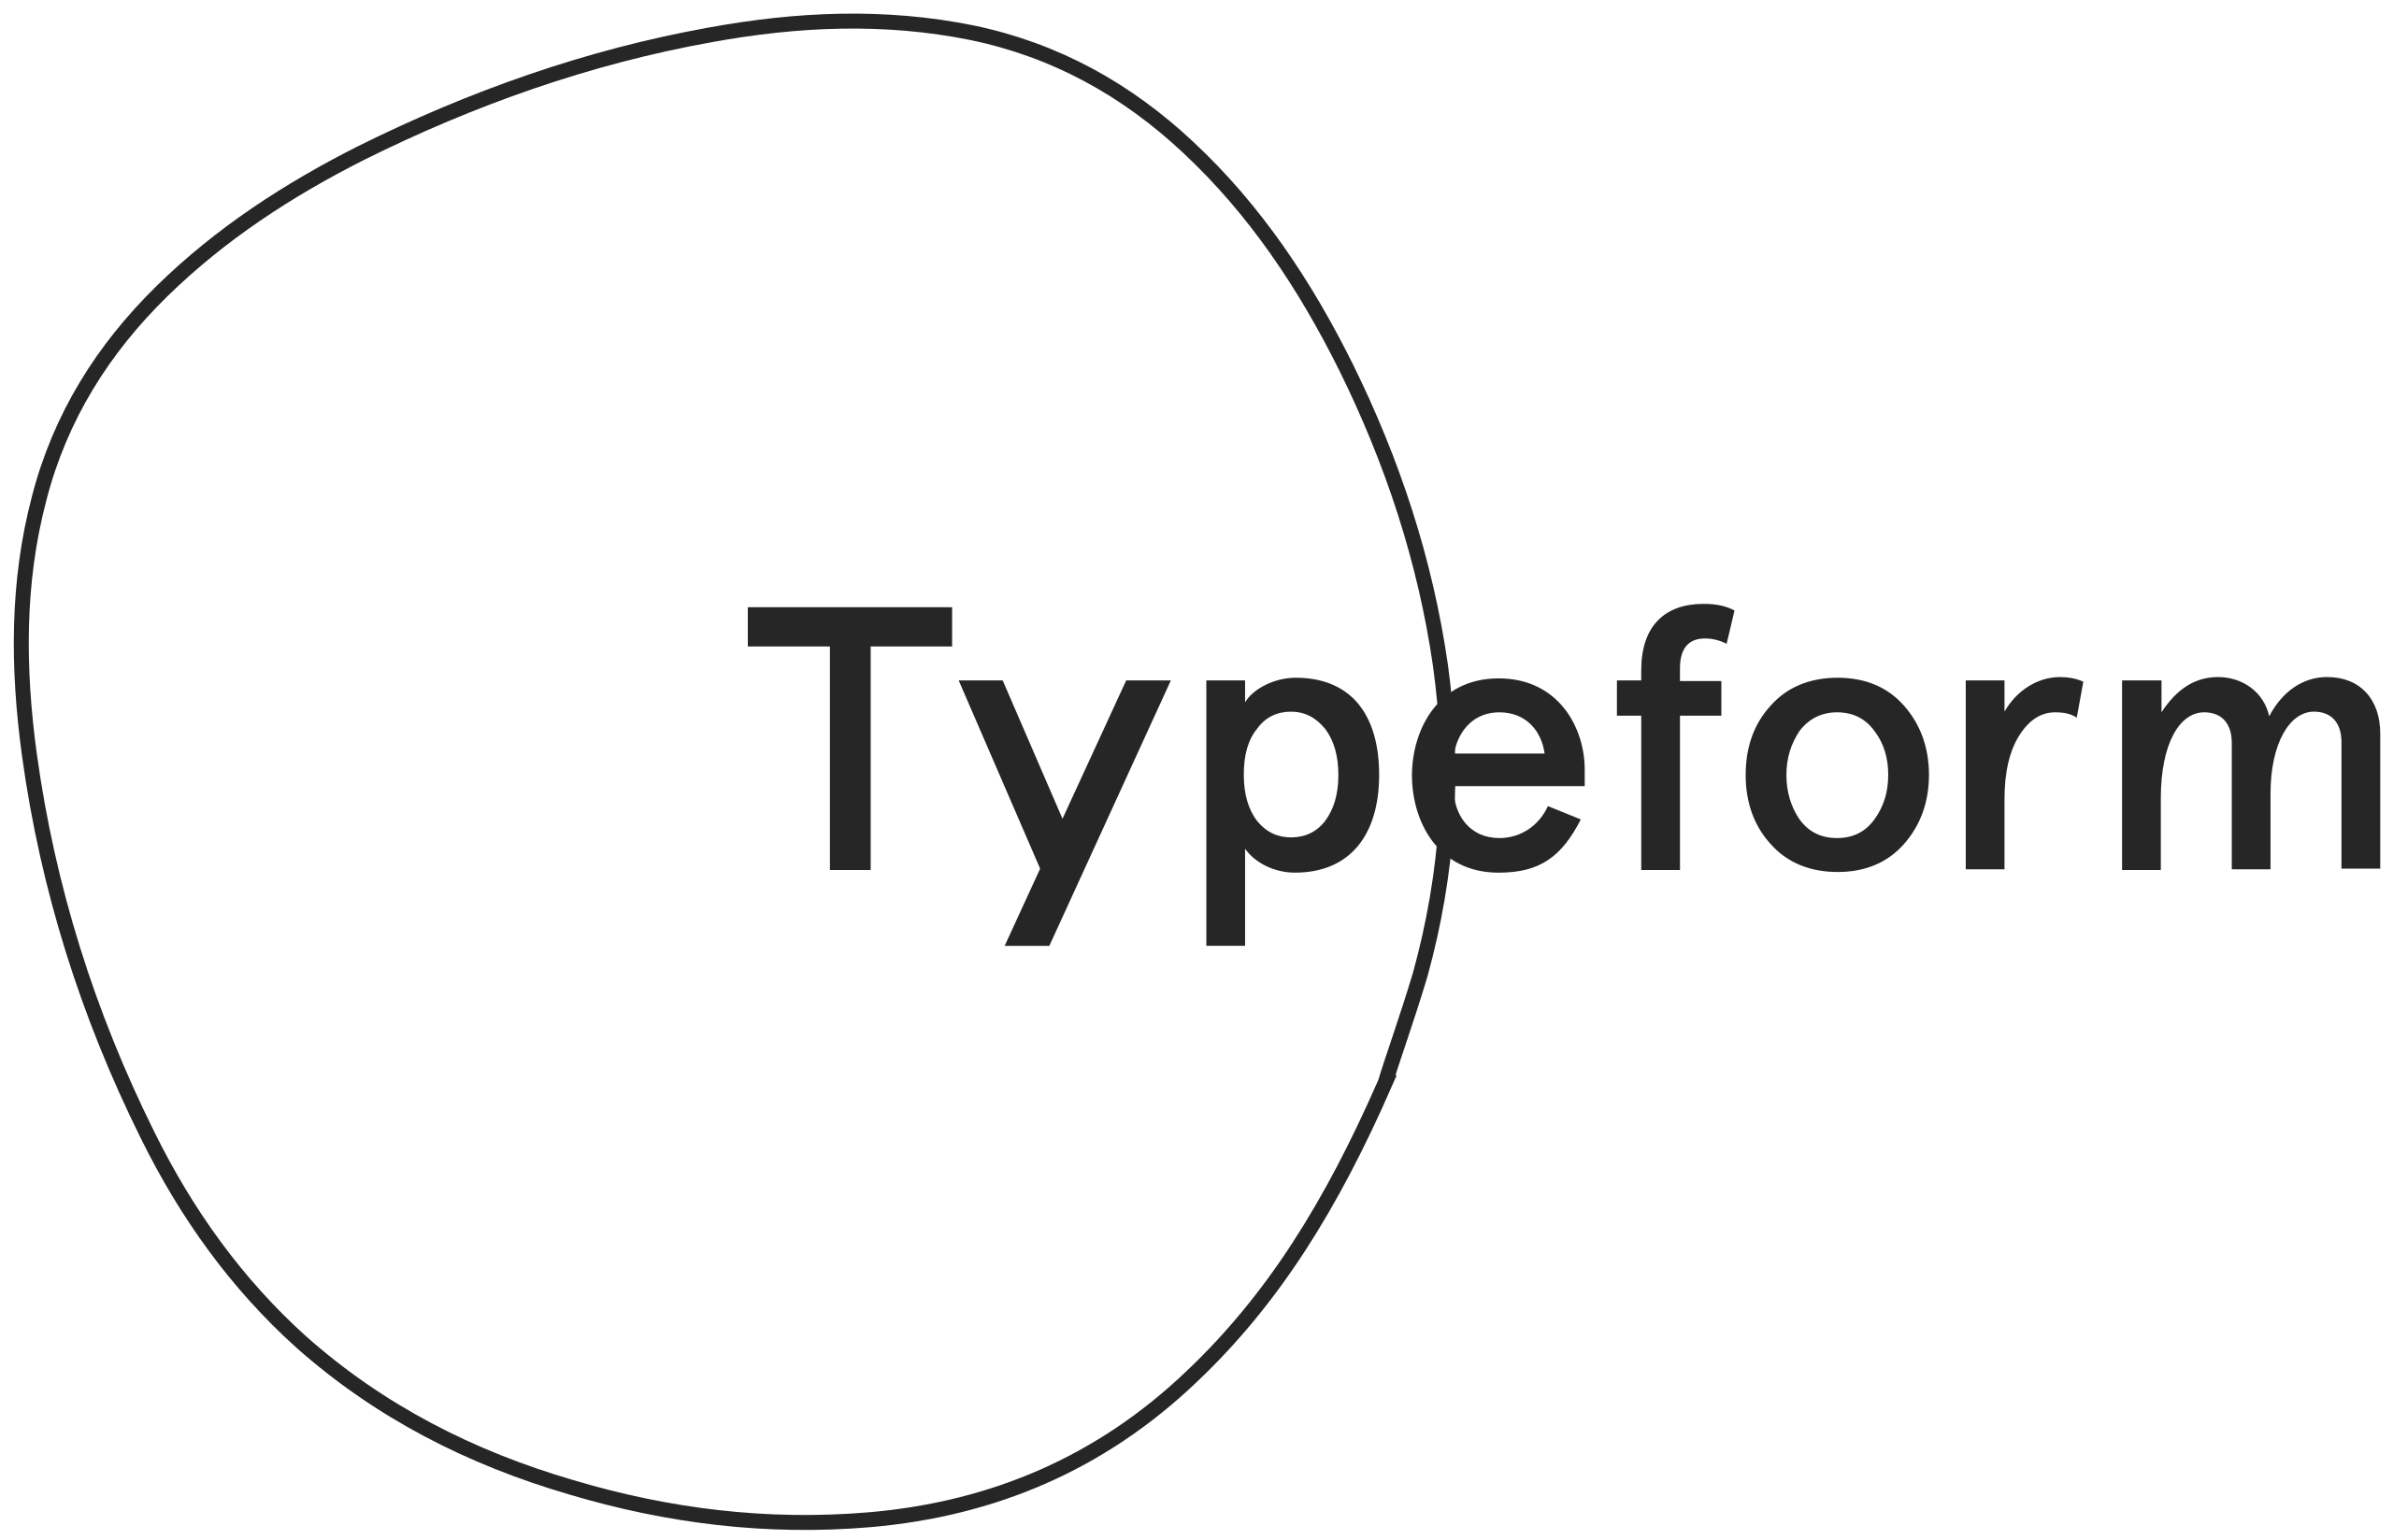 FileTypeform Logosvg - Wikimedia Commons